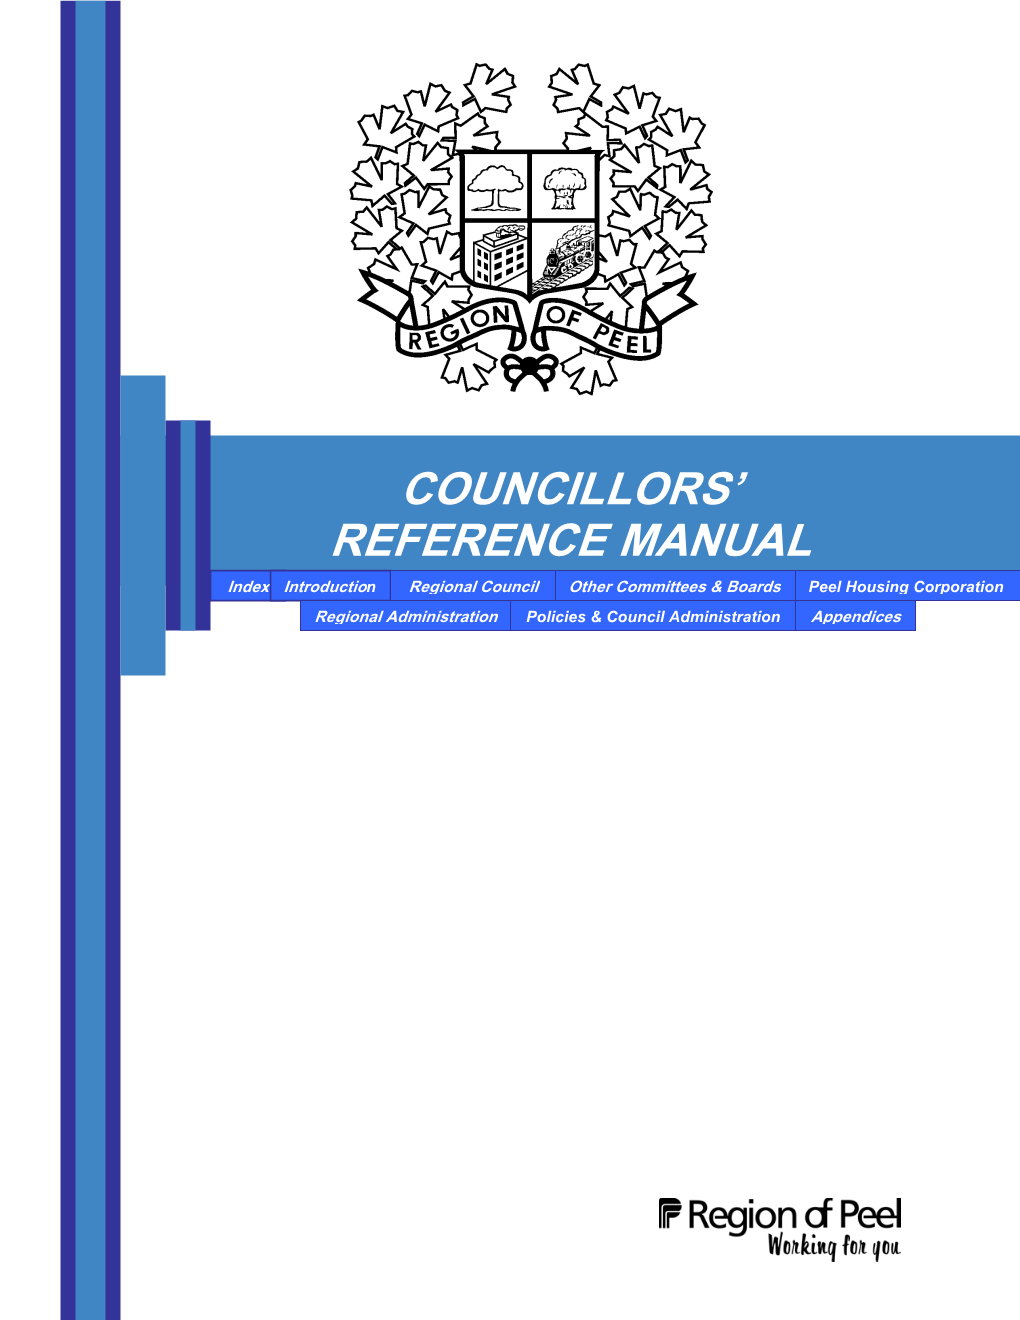 Councillors' Reference Manual